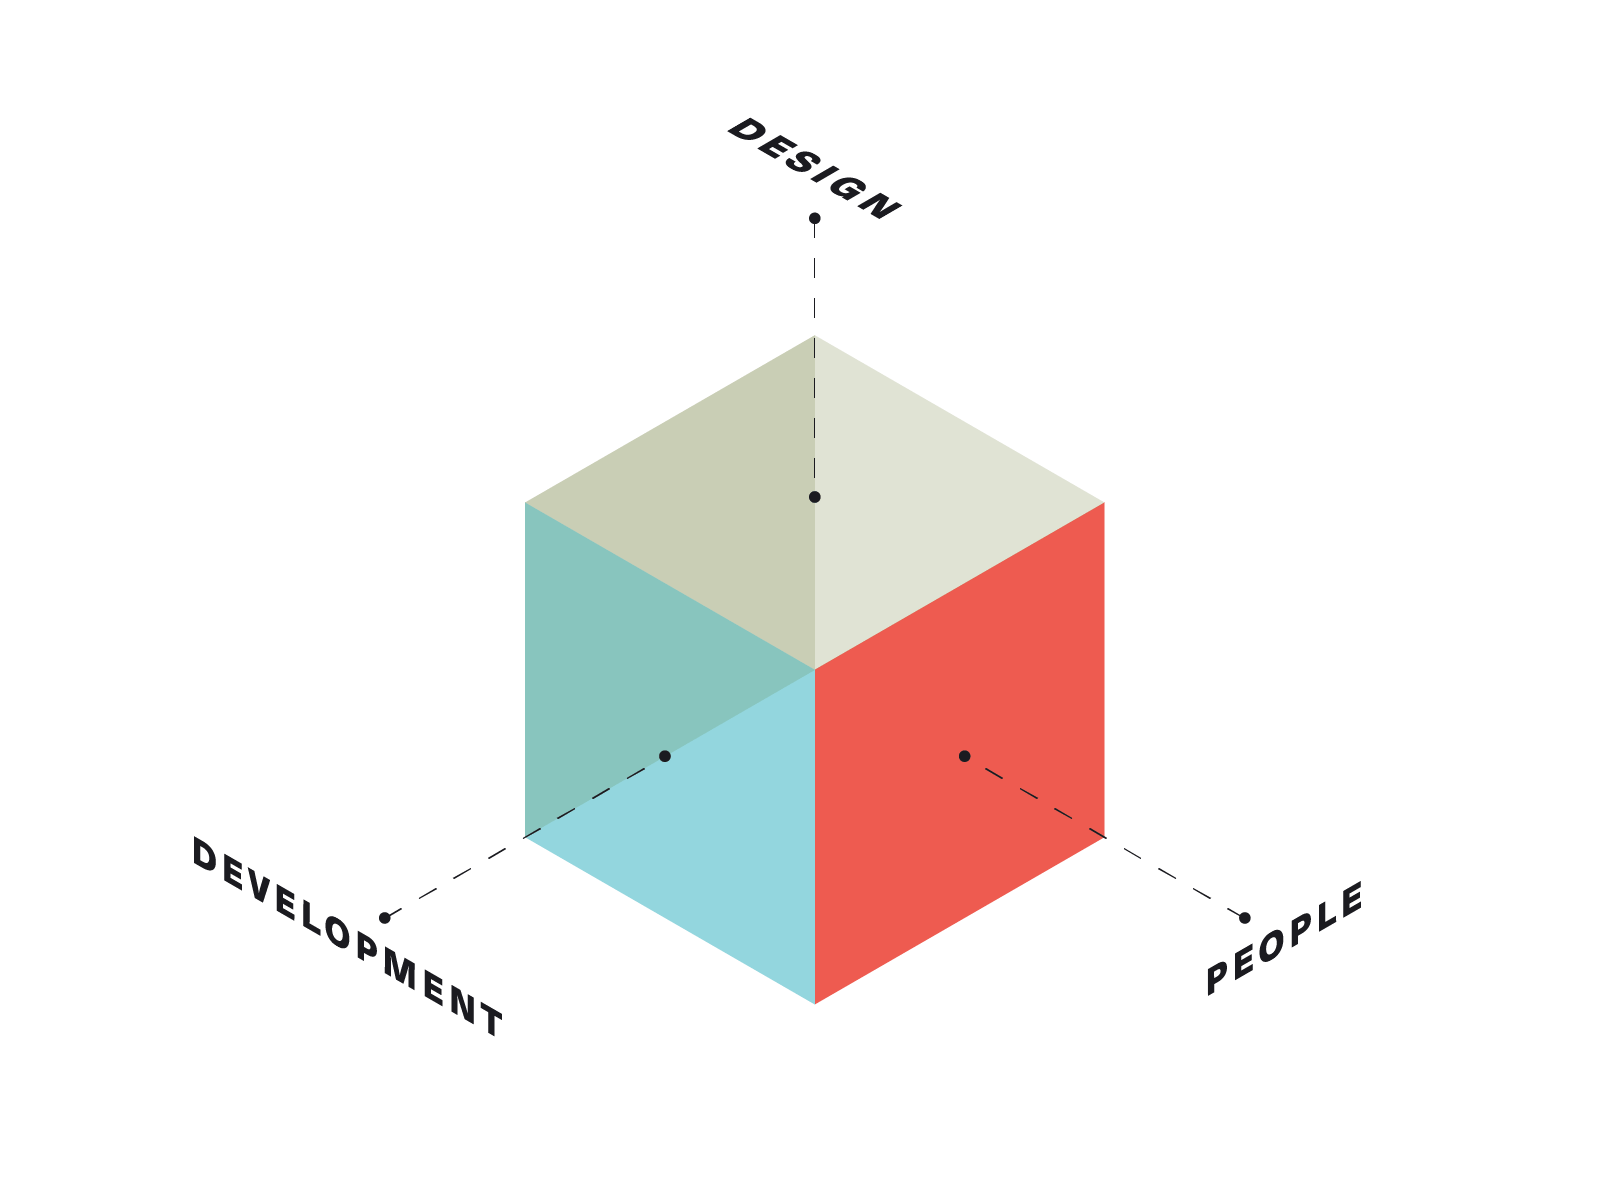 Diagram showing multiple dimensions